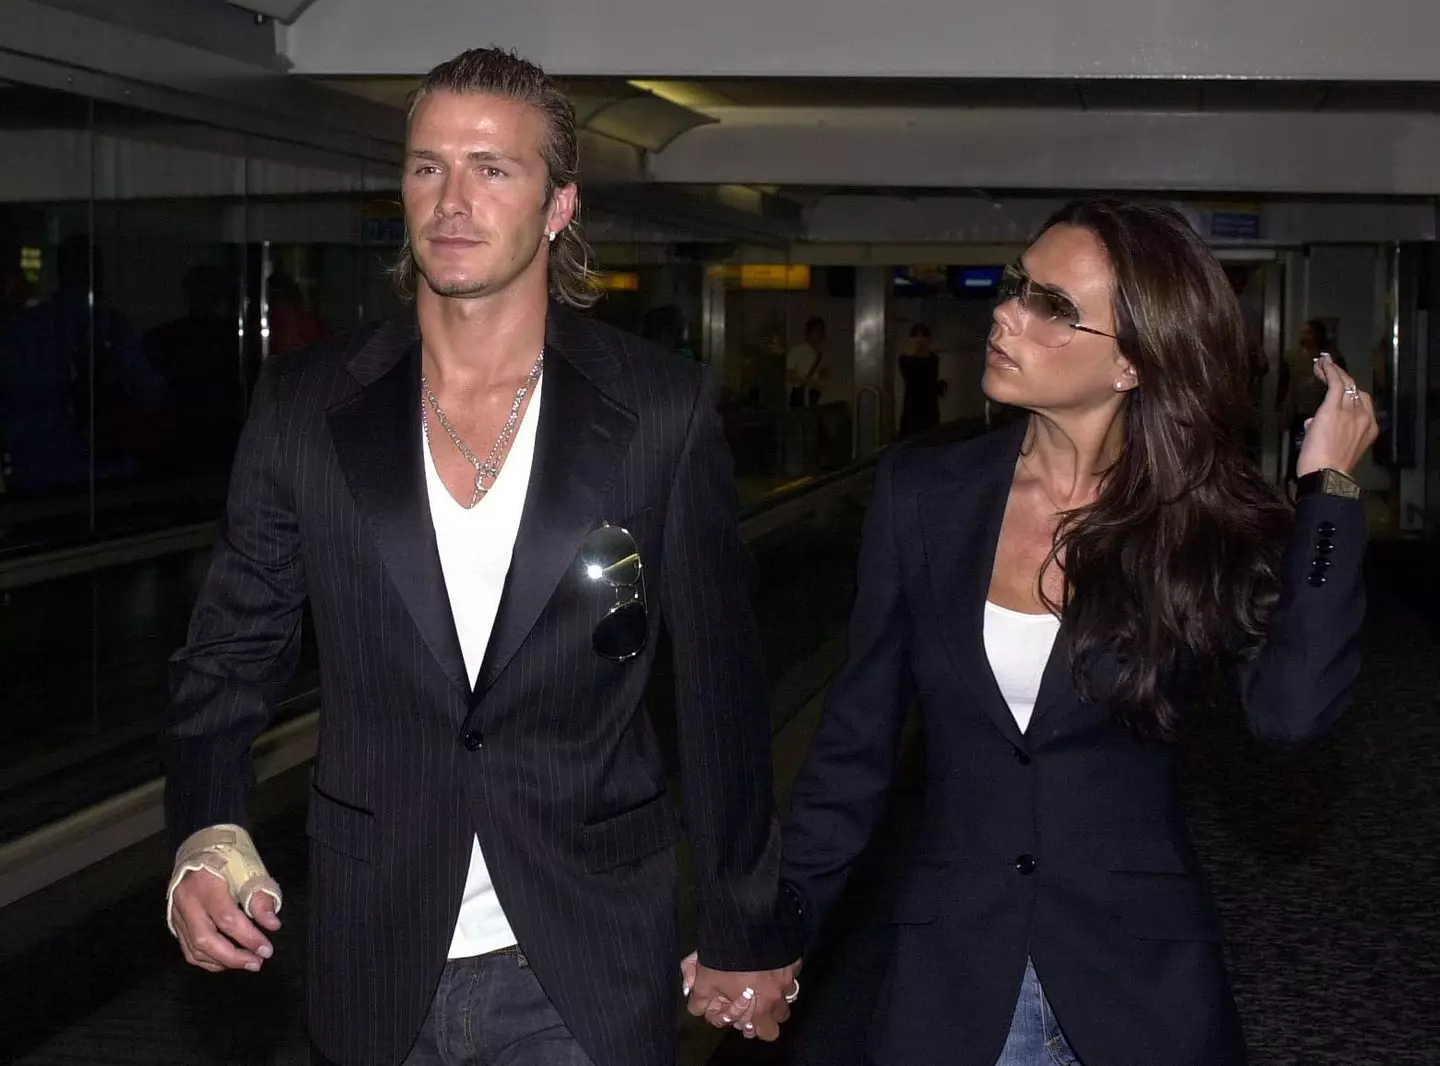 Victoria Beckham and David Beckham first started dating in 1997.